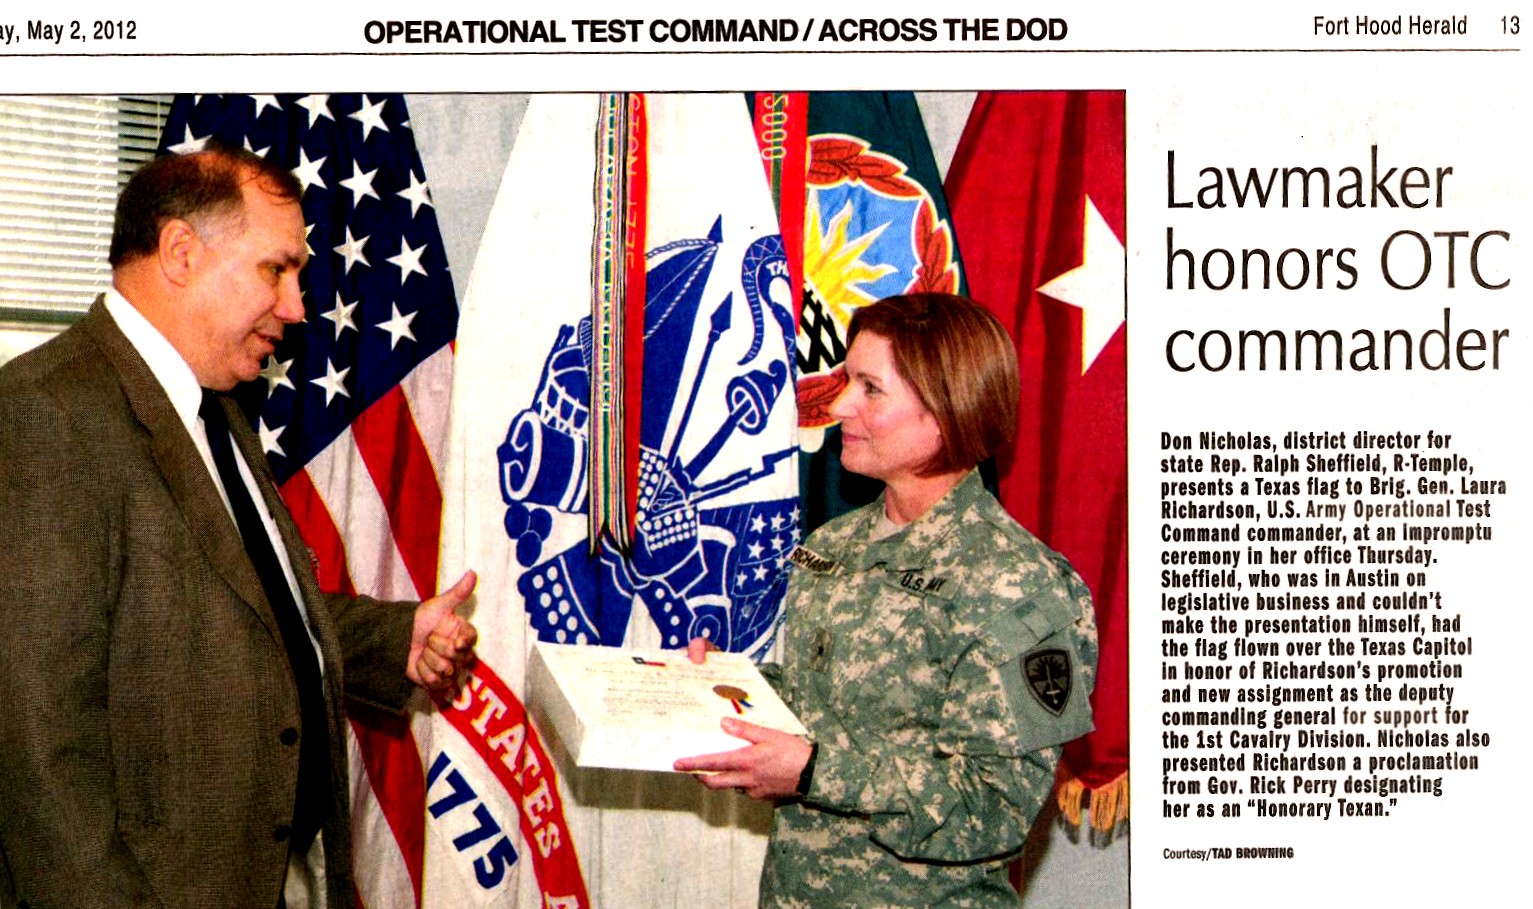 Lawmaker honors OTC commander